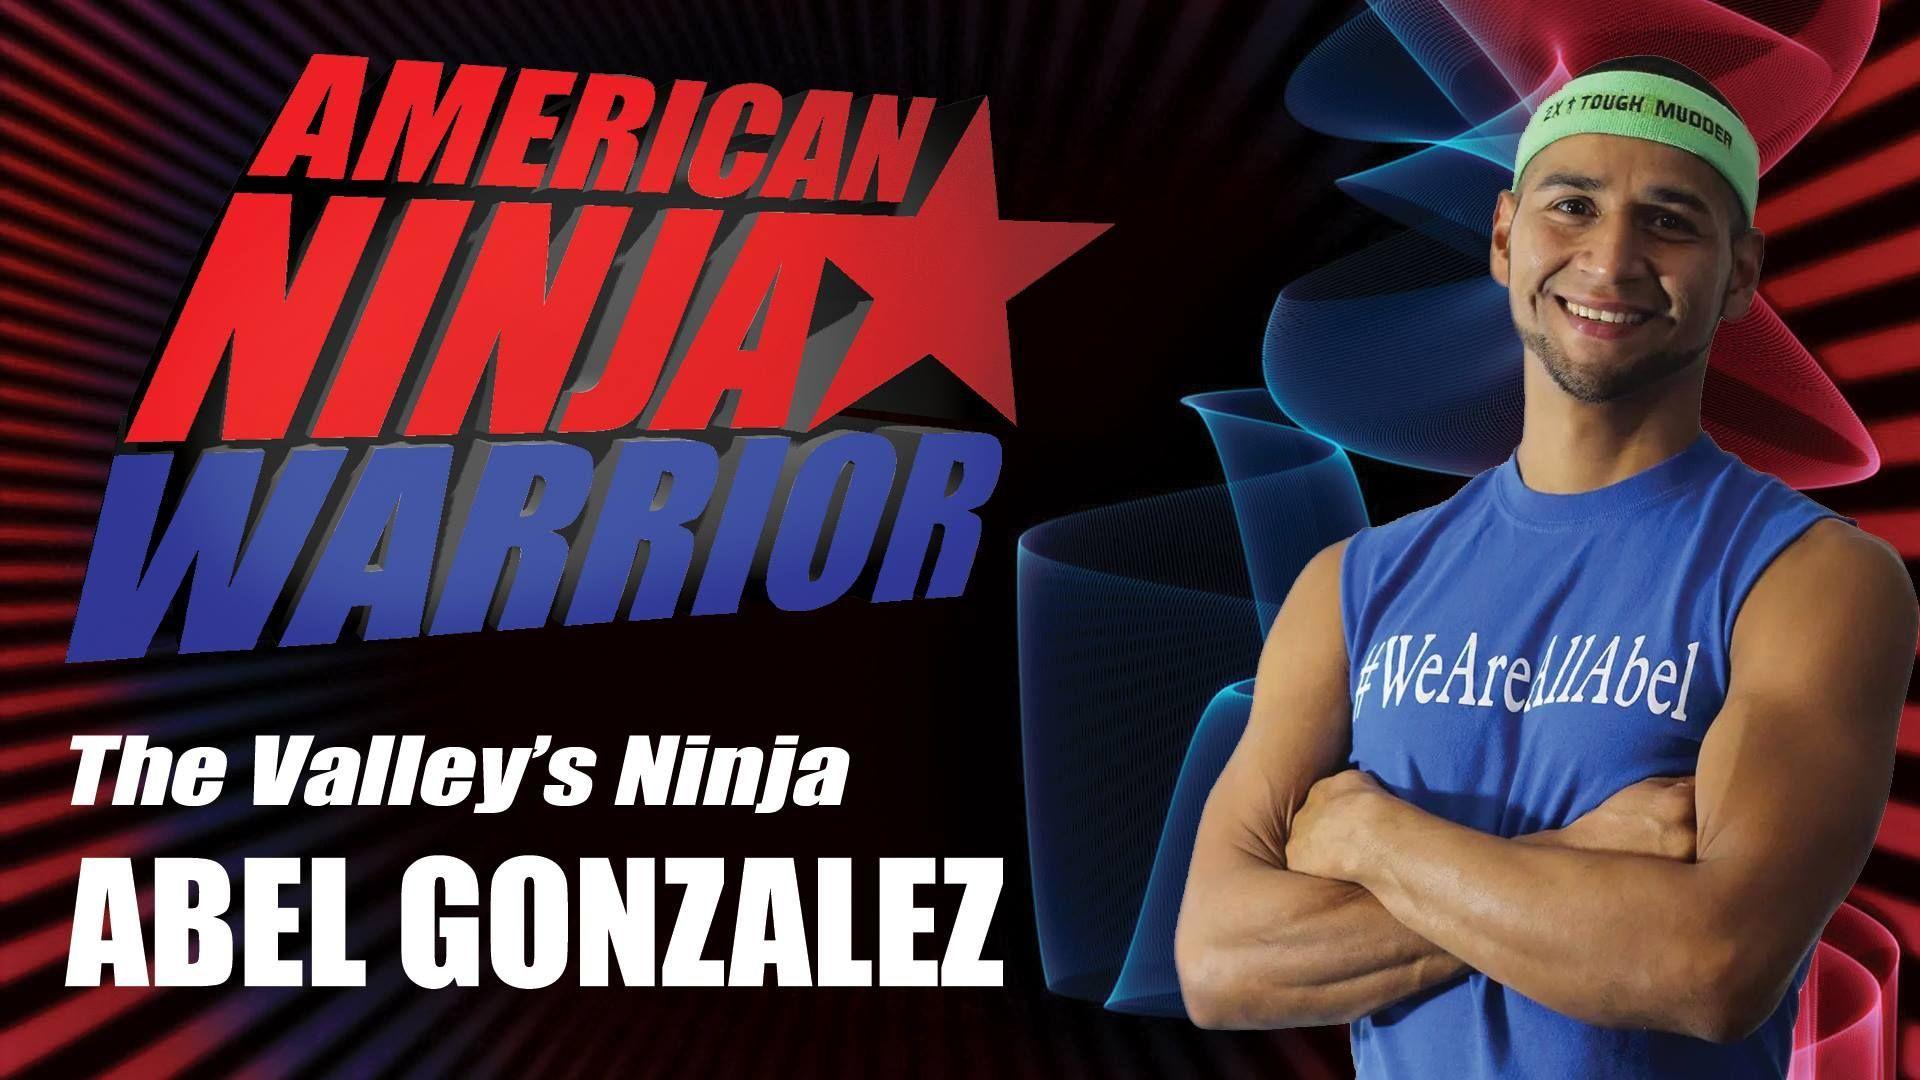 American Ninja Warrior Wallpapers Top Free American Ninja Warrior Backgrounds Wallpaperaccess - american ninja warrior vegas finals roblox